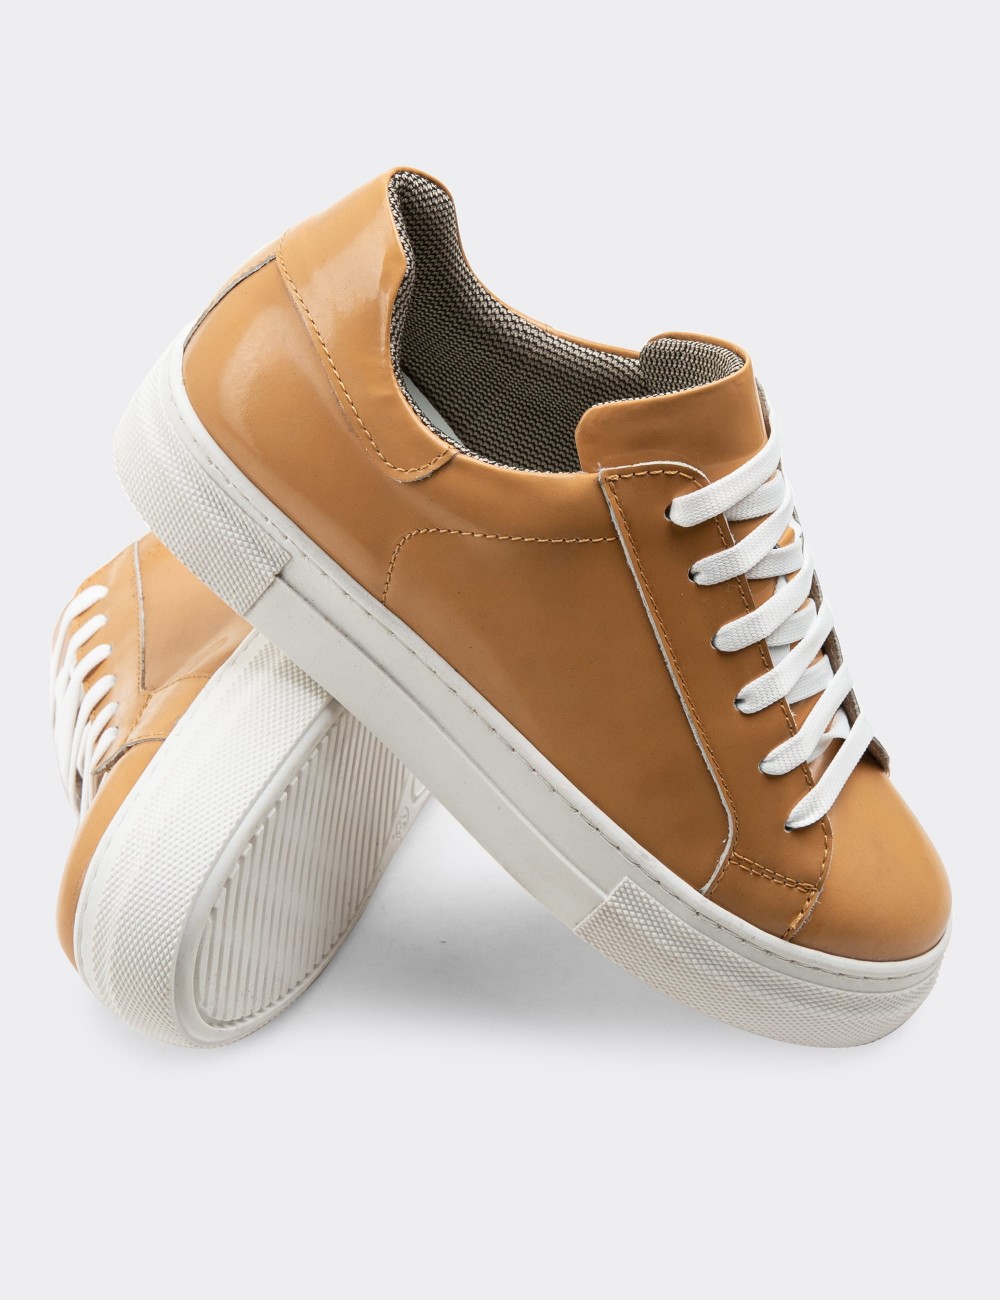 Camel  Leather Sneakers - Z1681ZCMLC01